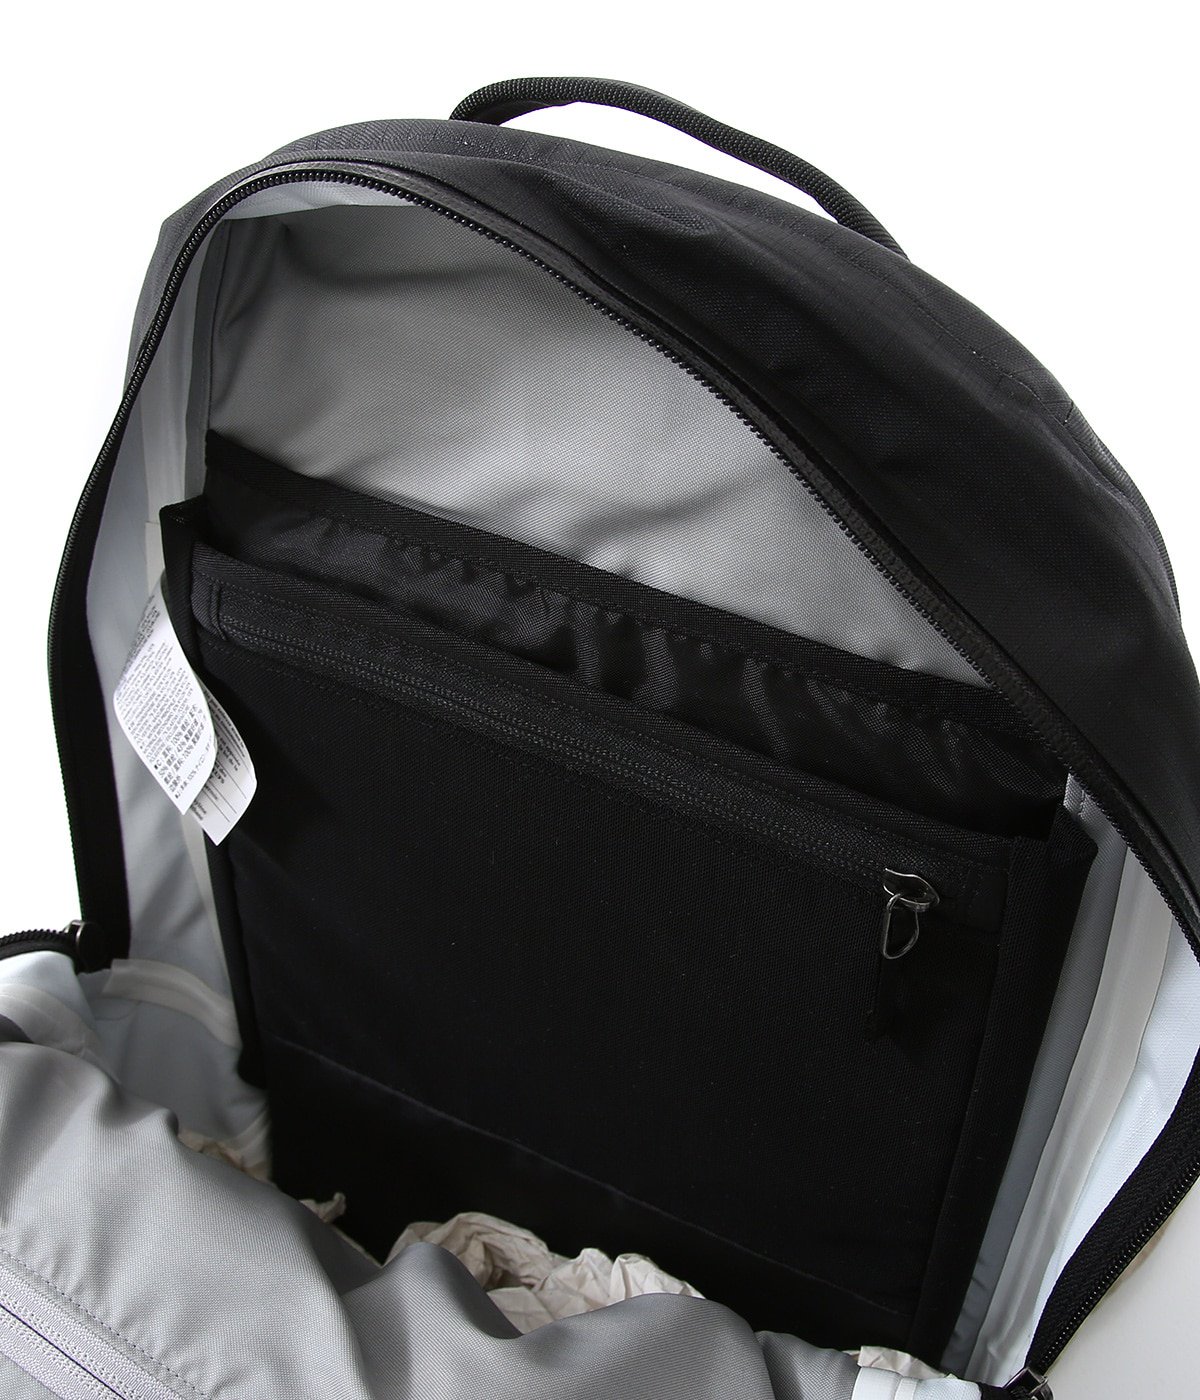 Granville Zip 16 Backpack | ARC’TERYX(アークテリクス) / バッグ バックパック (メンズ レディース